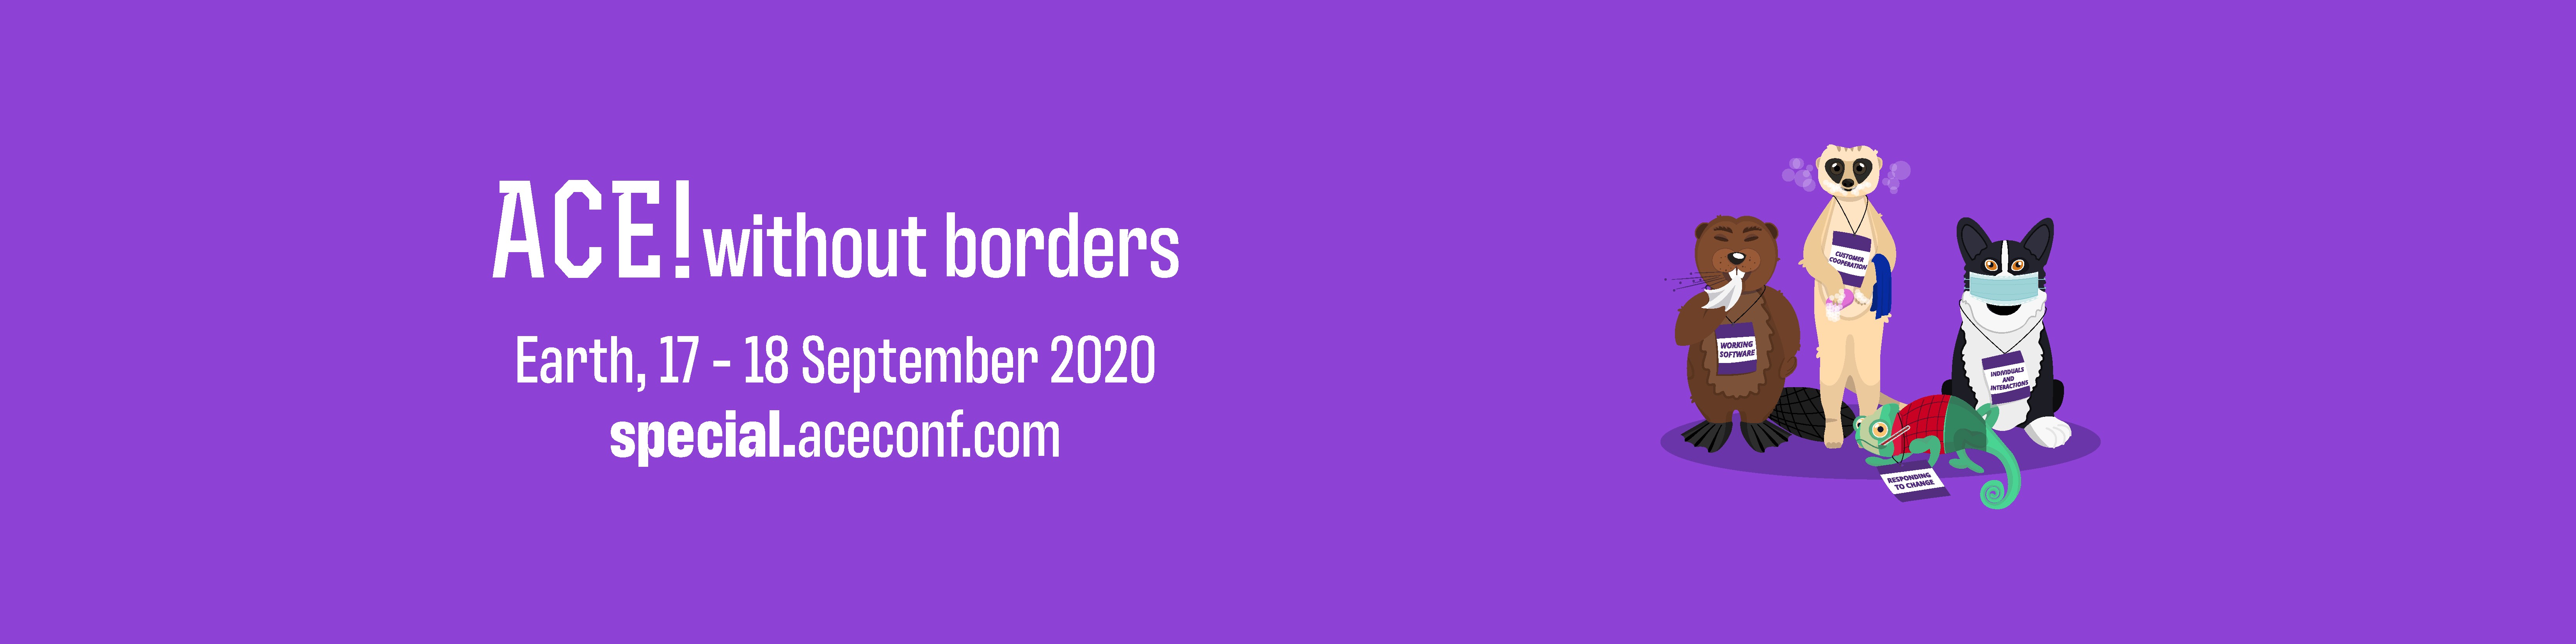 ace-without-borders-wrzesien-2020